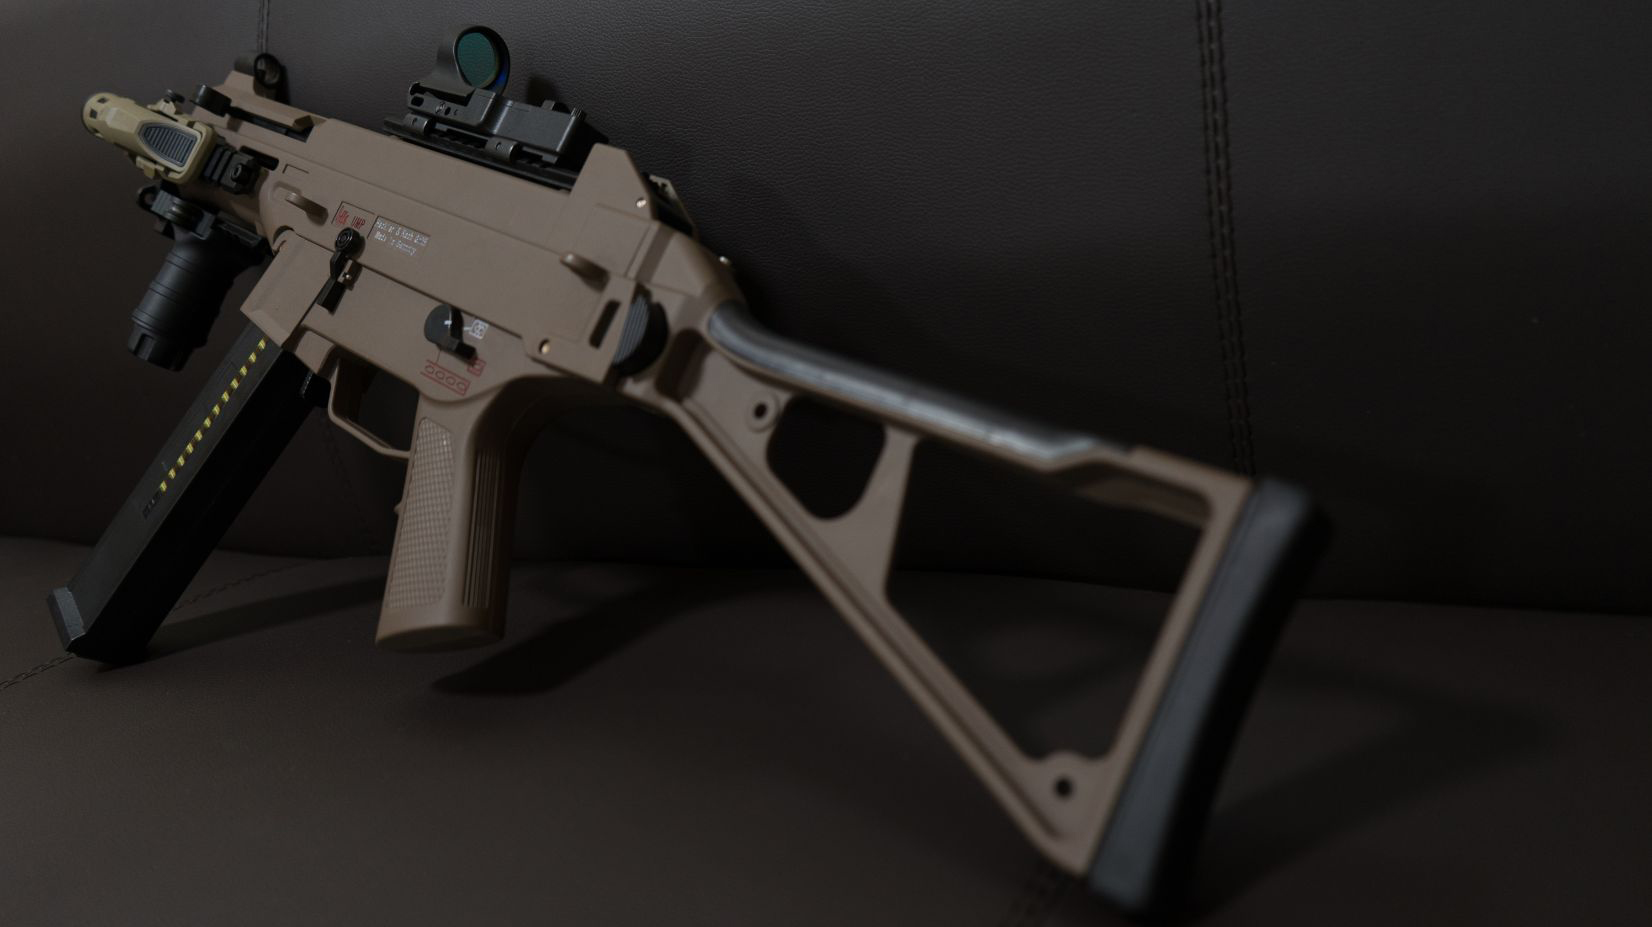 ump9冲锋枪 3D图片